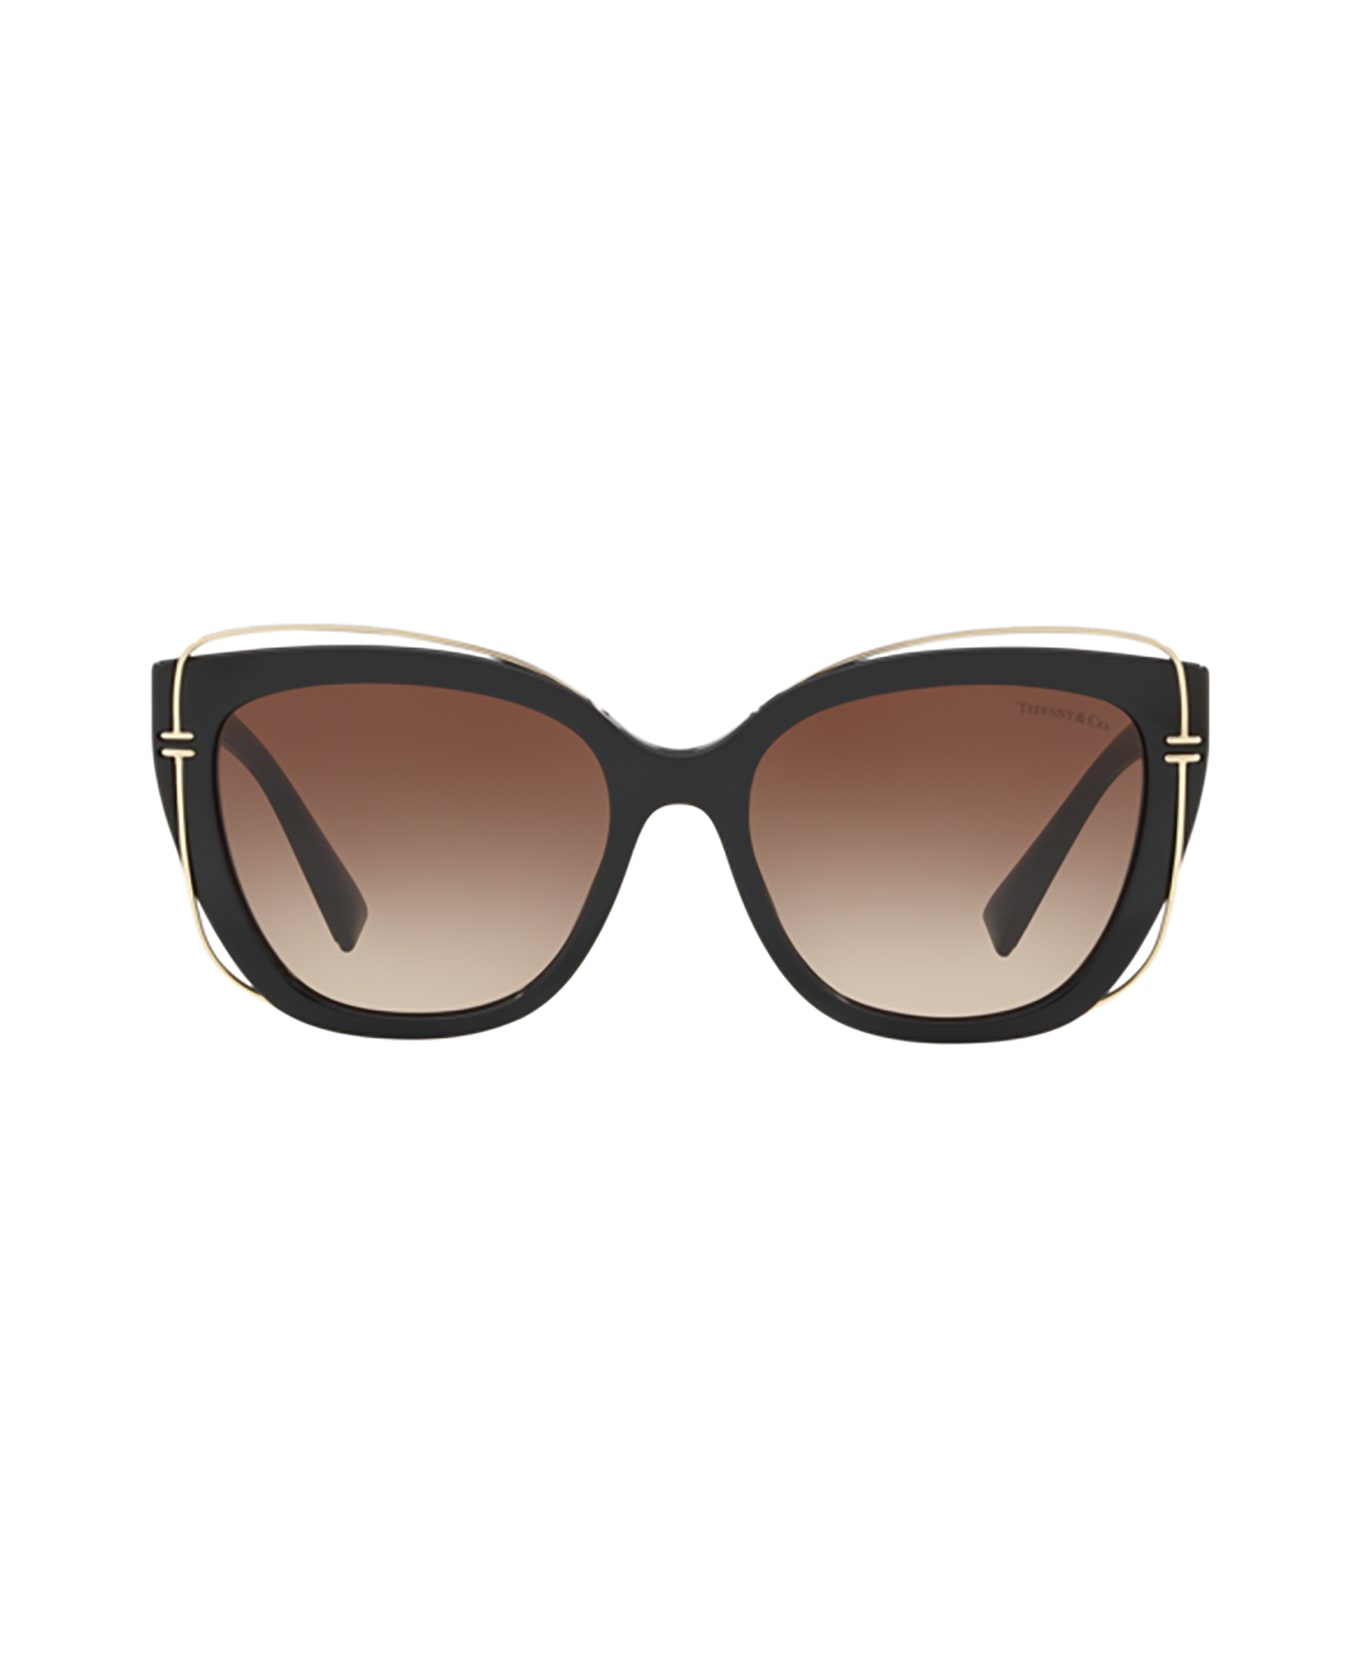 Tiffany & Co. Tf4148 Black Sunglasses - Black